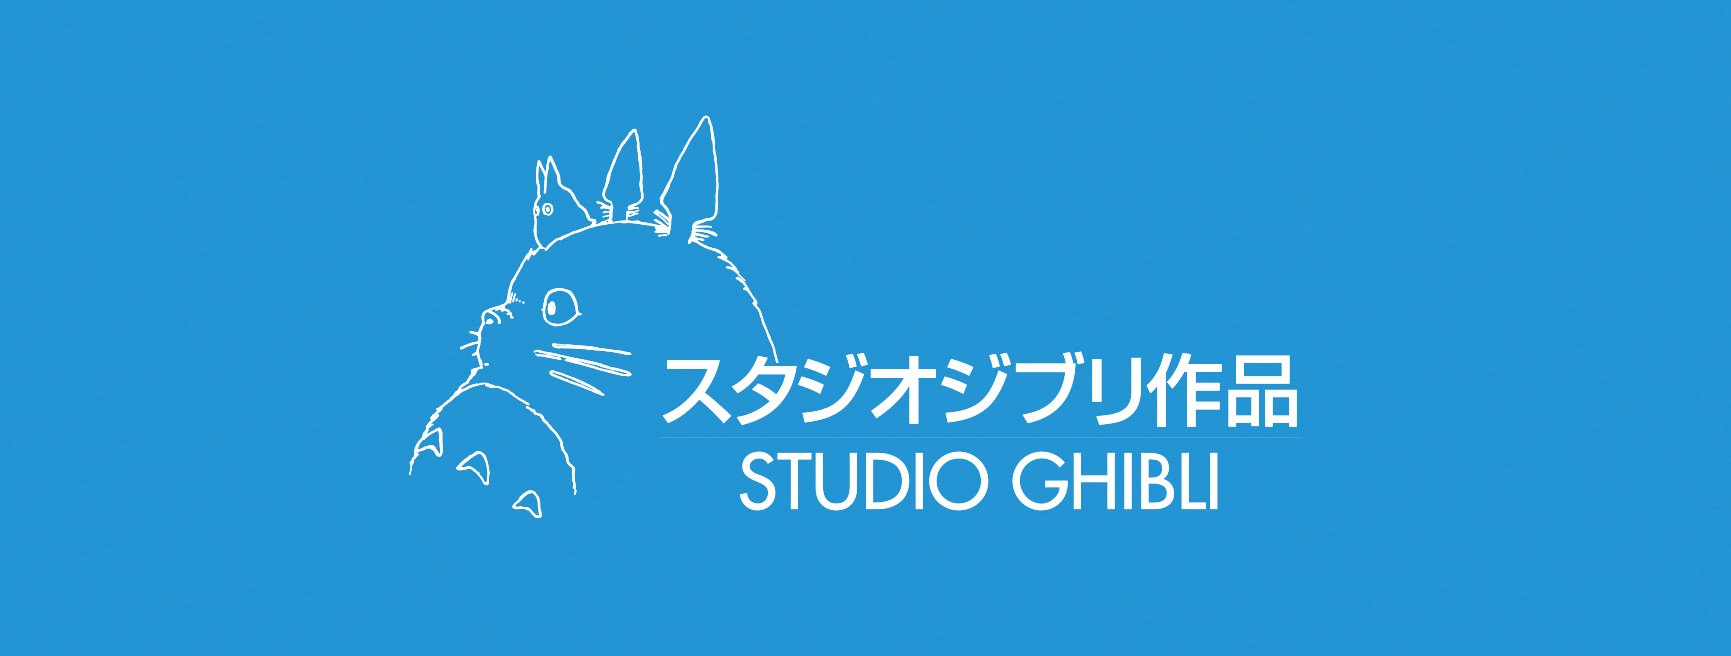 Studio Ghibli to Release Hayao Miyazaki’s Final Film ‘How Do You Live?’ With No Trailer, No Promotional Marketing